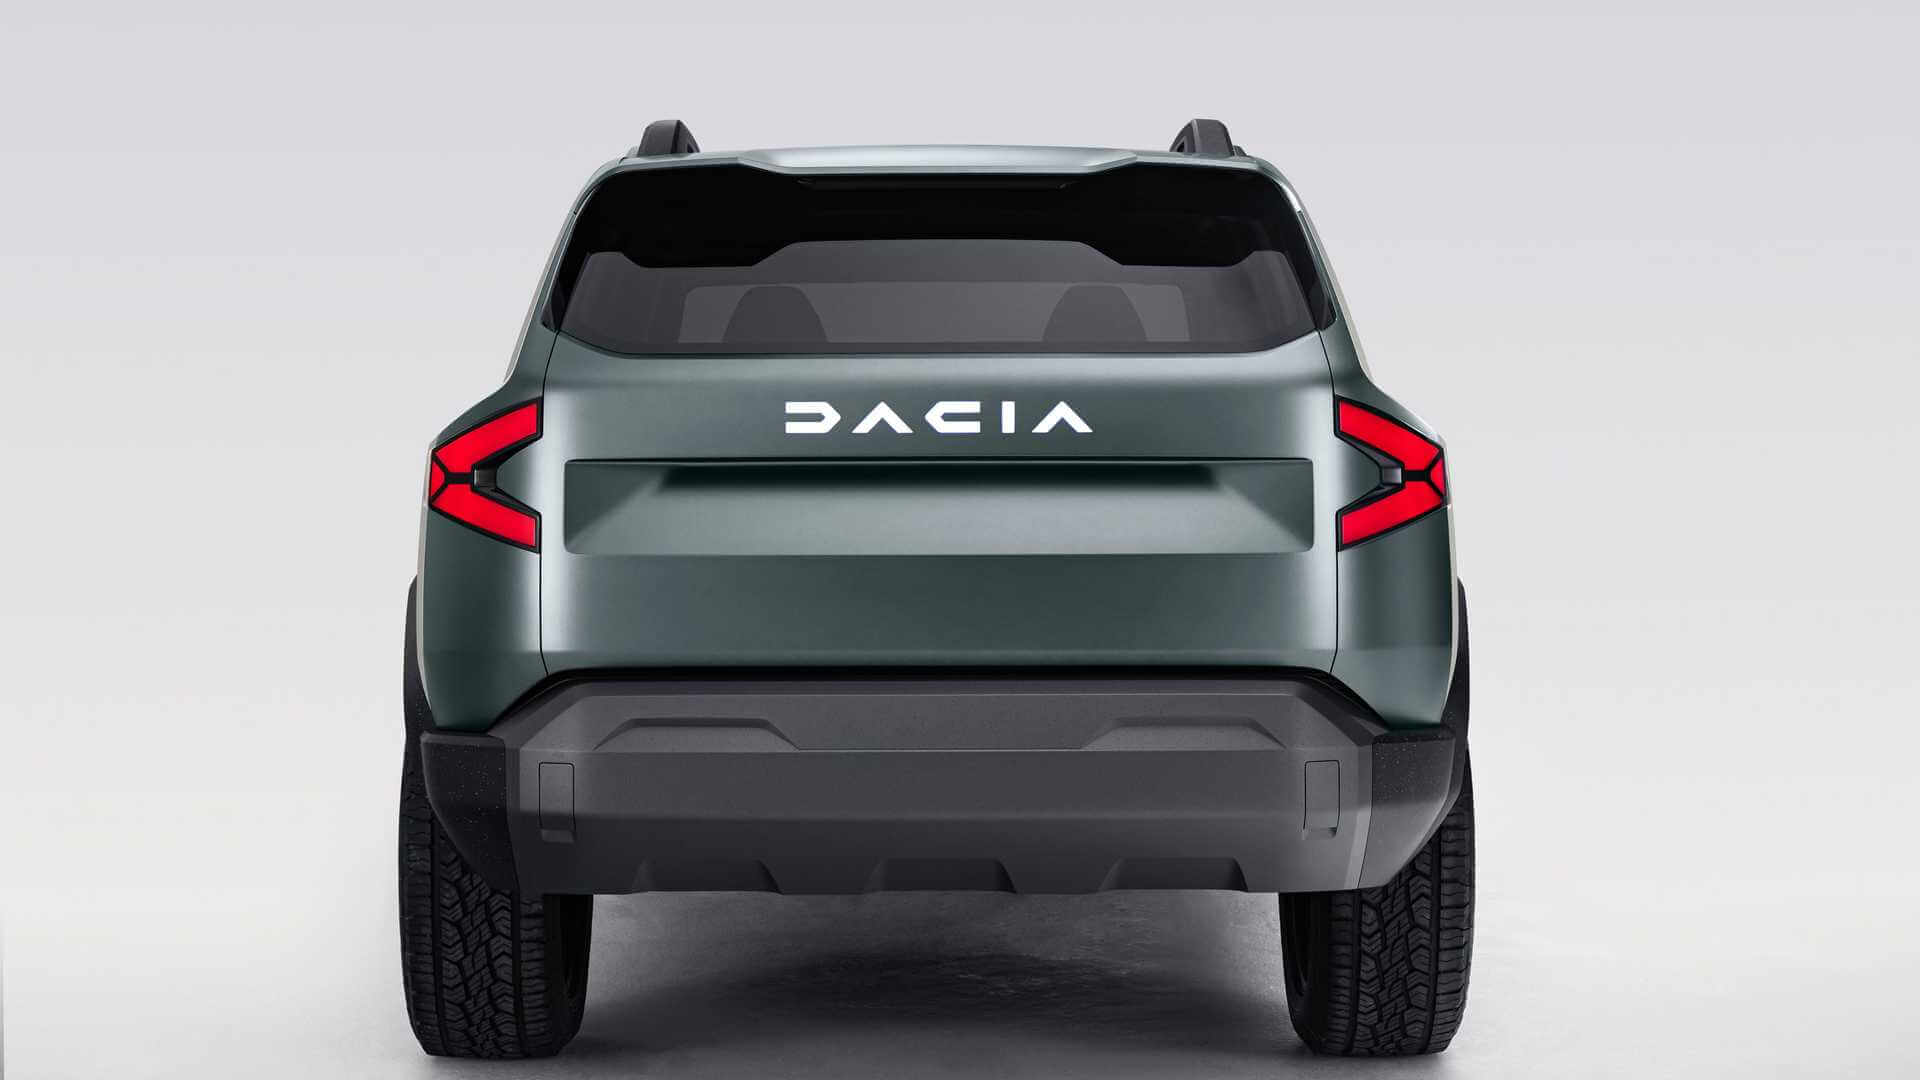 Dacia'nın Yeni Kompakt SUV'si: Dacia Bigster Konsepti